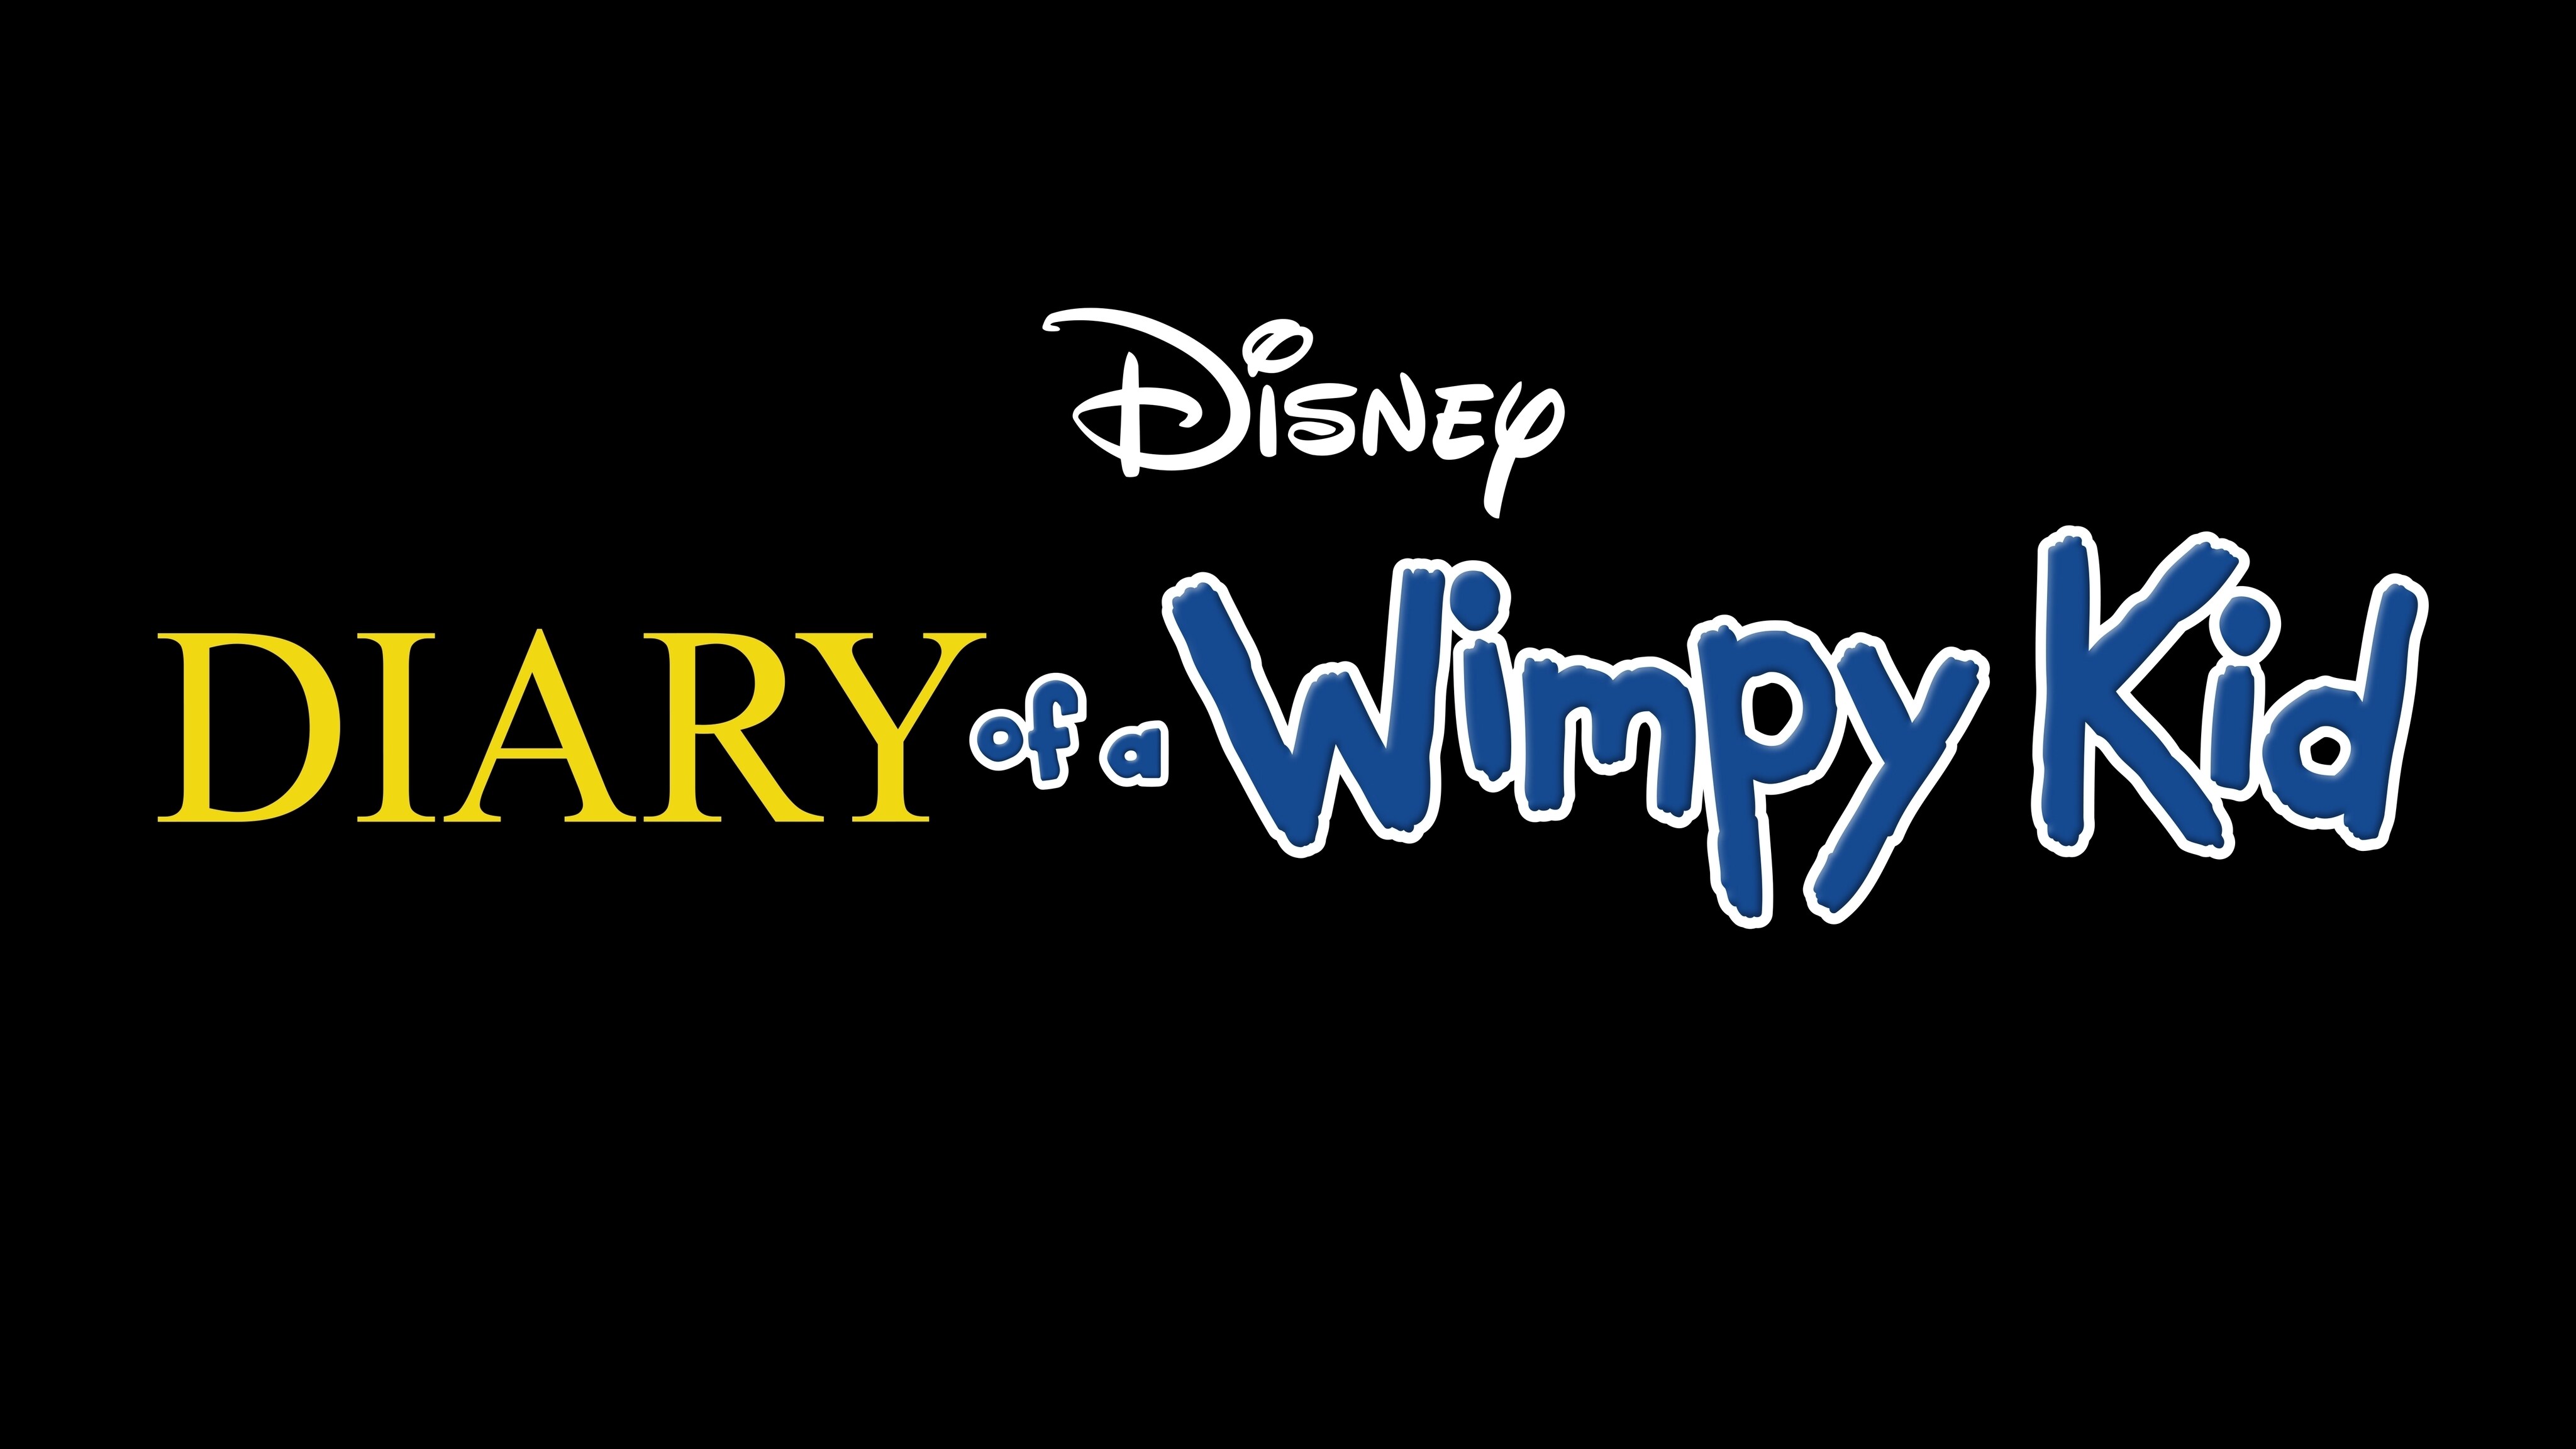 Diary of a Wimpy Kid Logo - Black